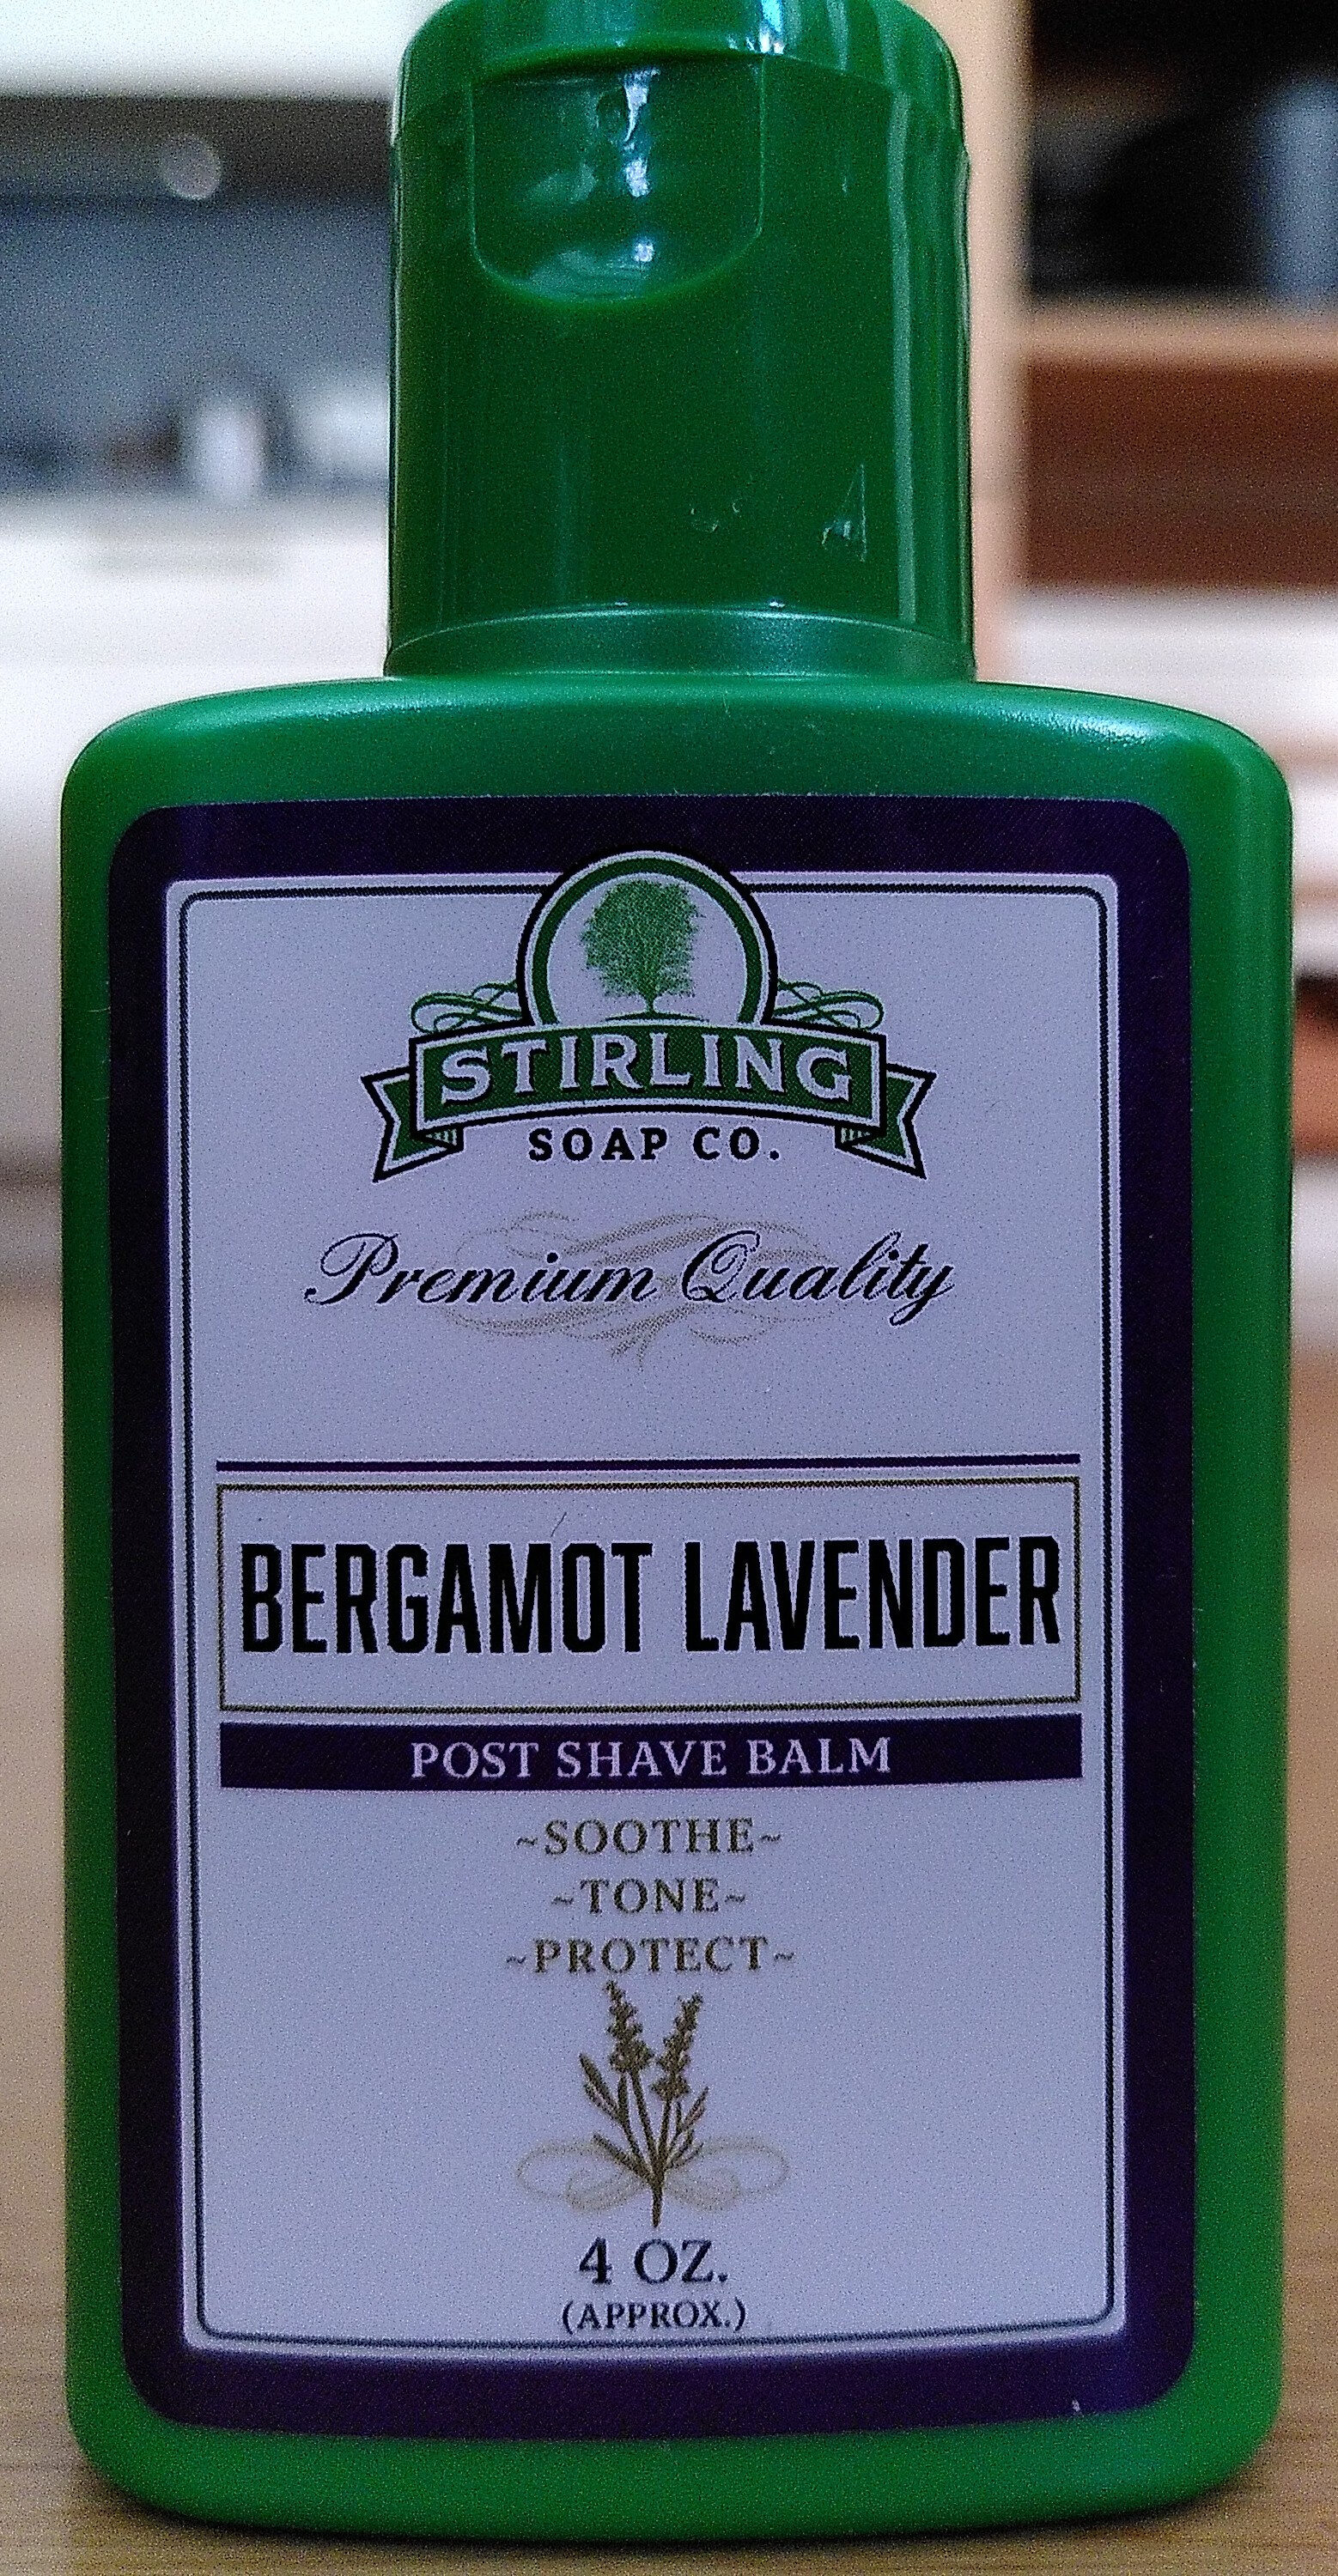 Bergamot Lavender Post Shave Balm - Produkt - en